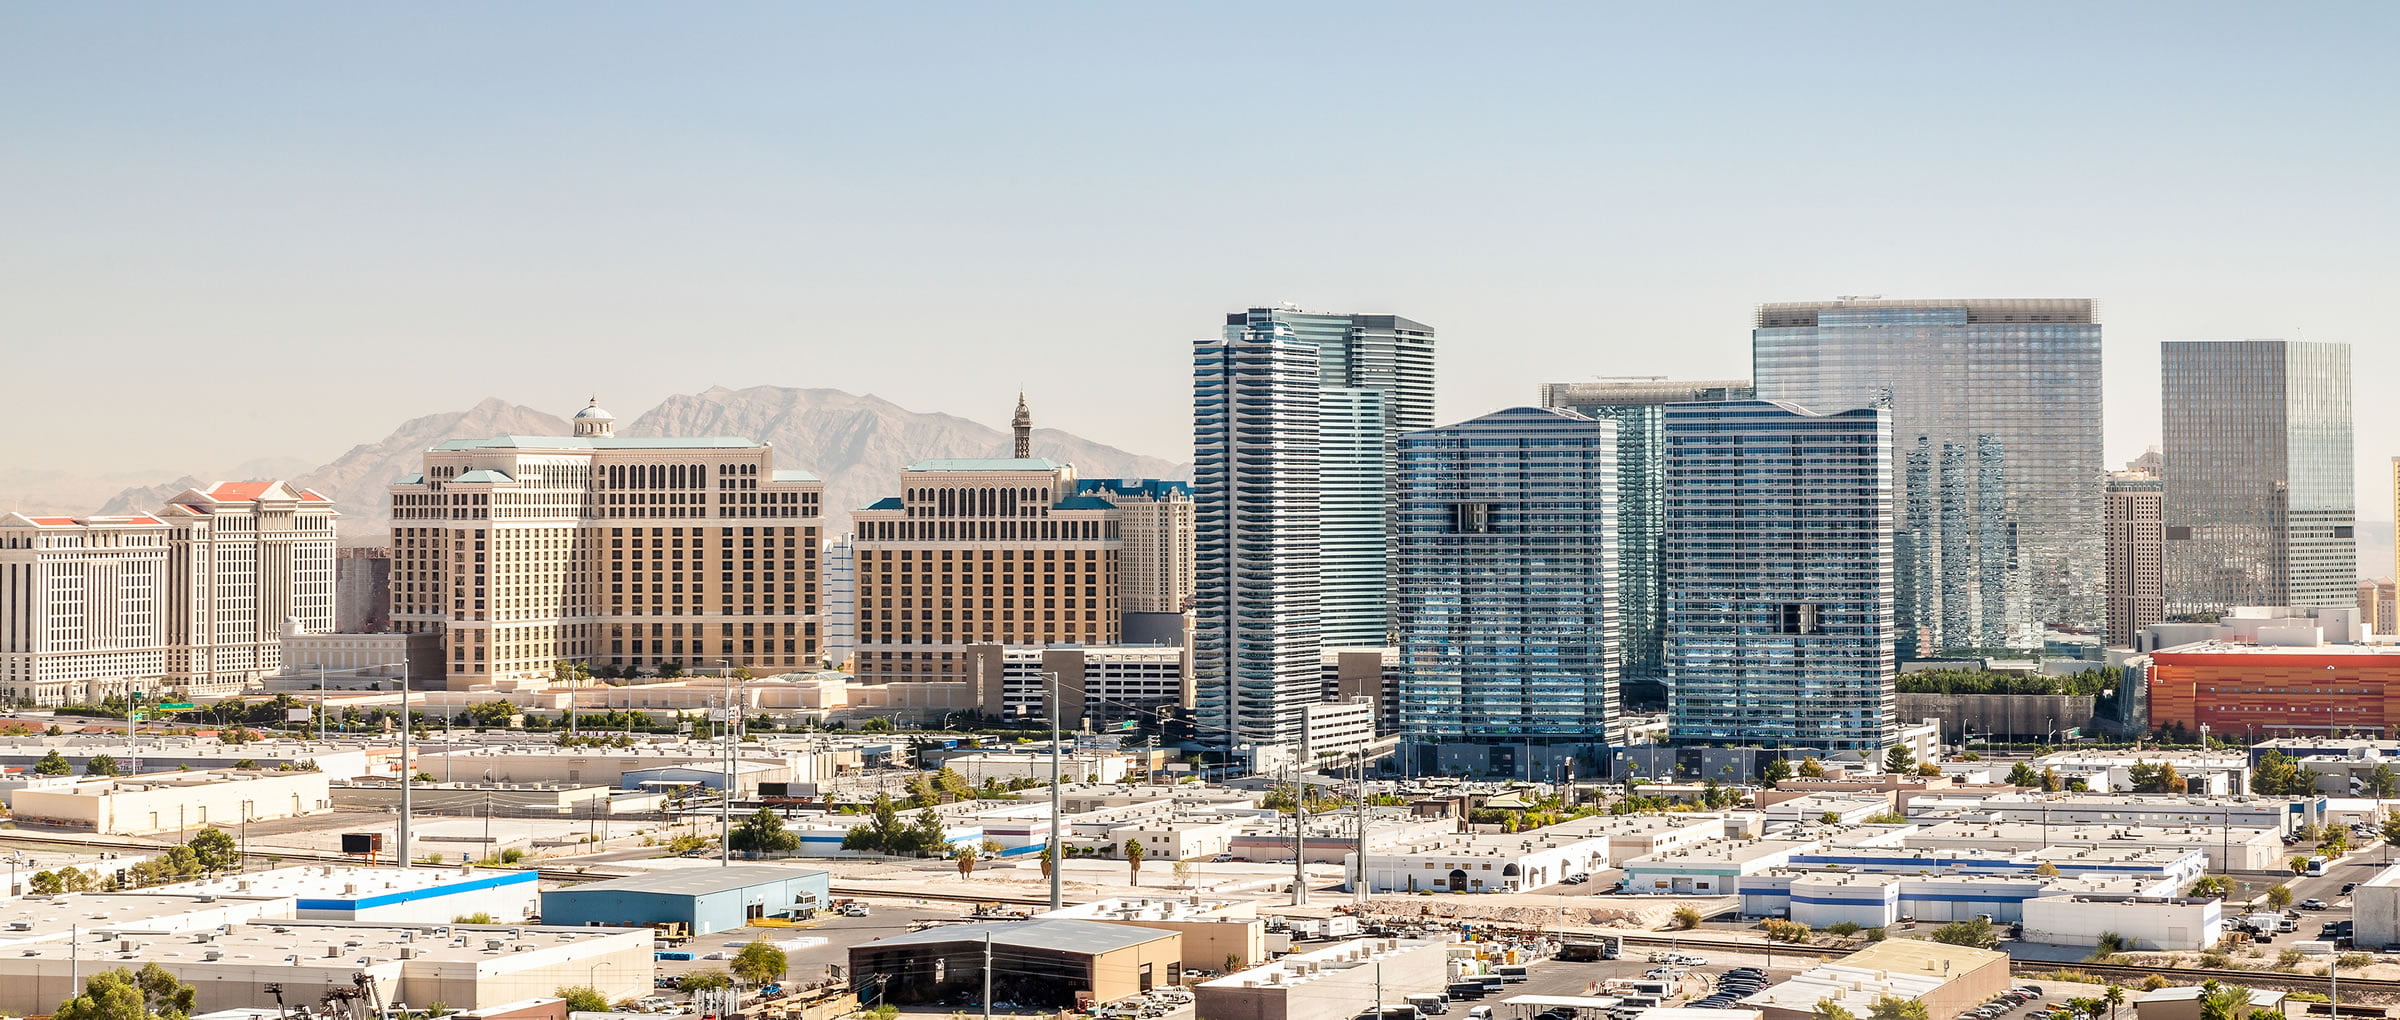 Vue panoramique de Las Vegas, Nevada